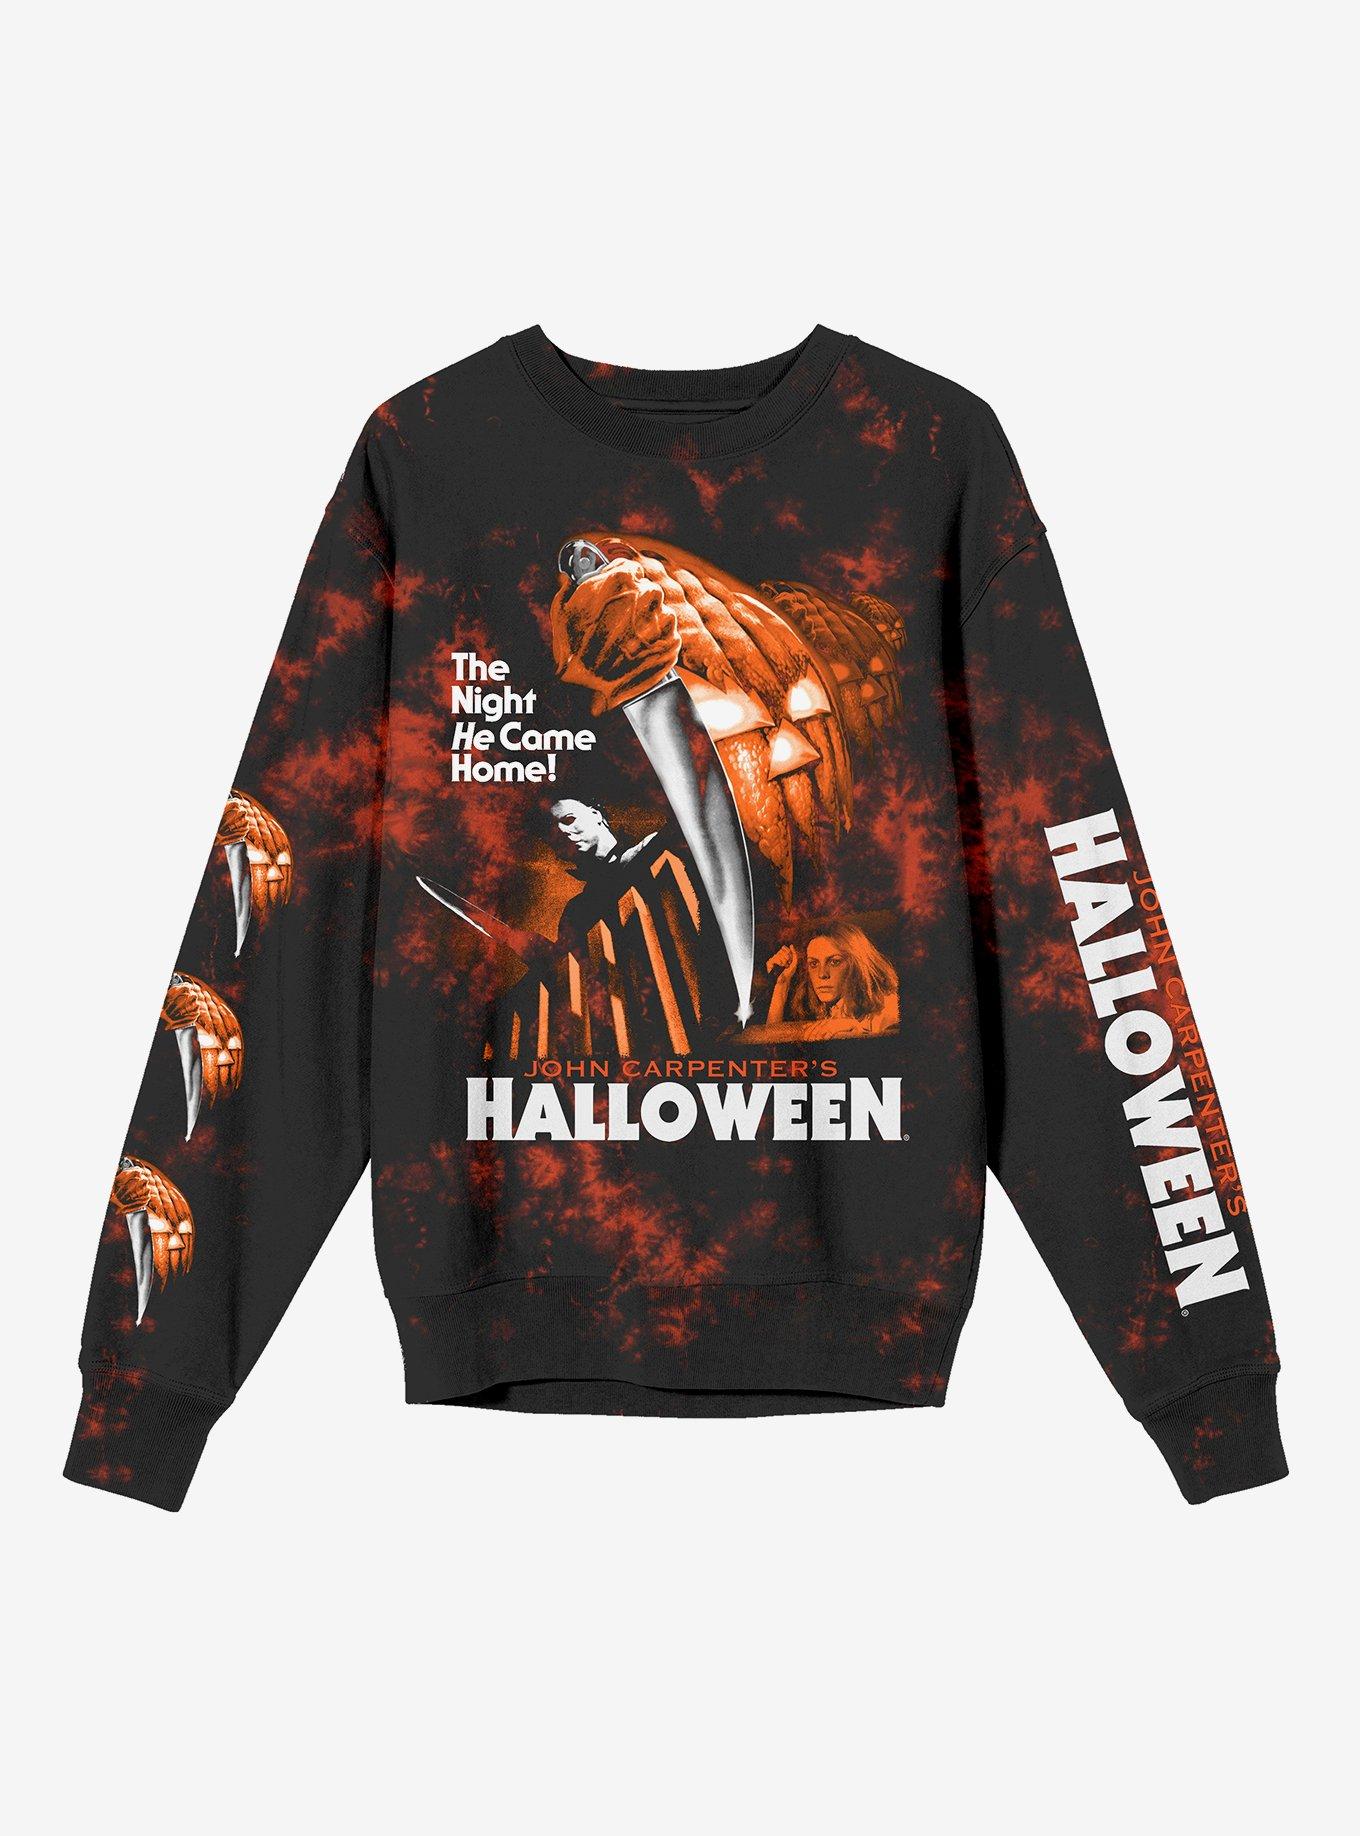 Salem king night John Killer Shirt, Custom prints store